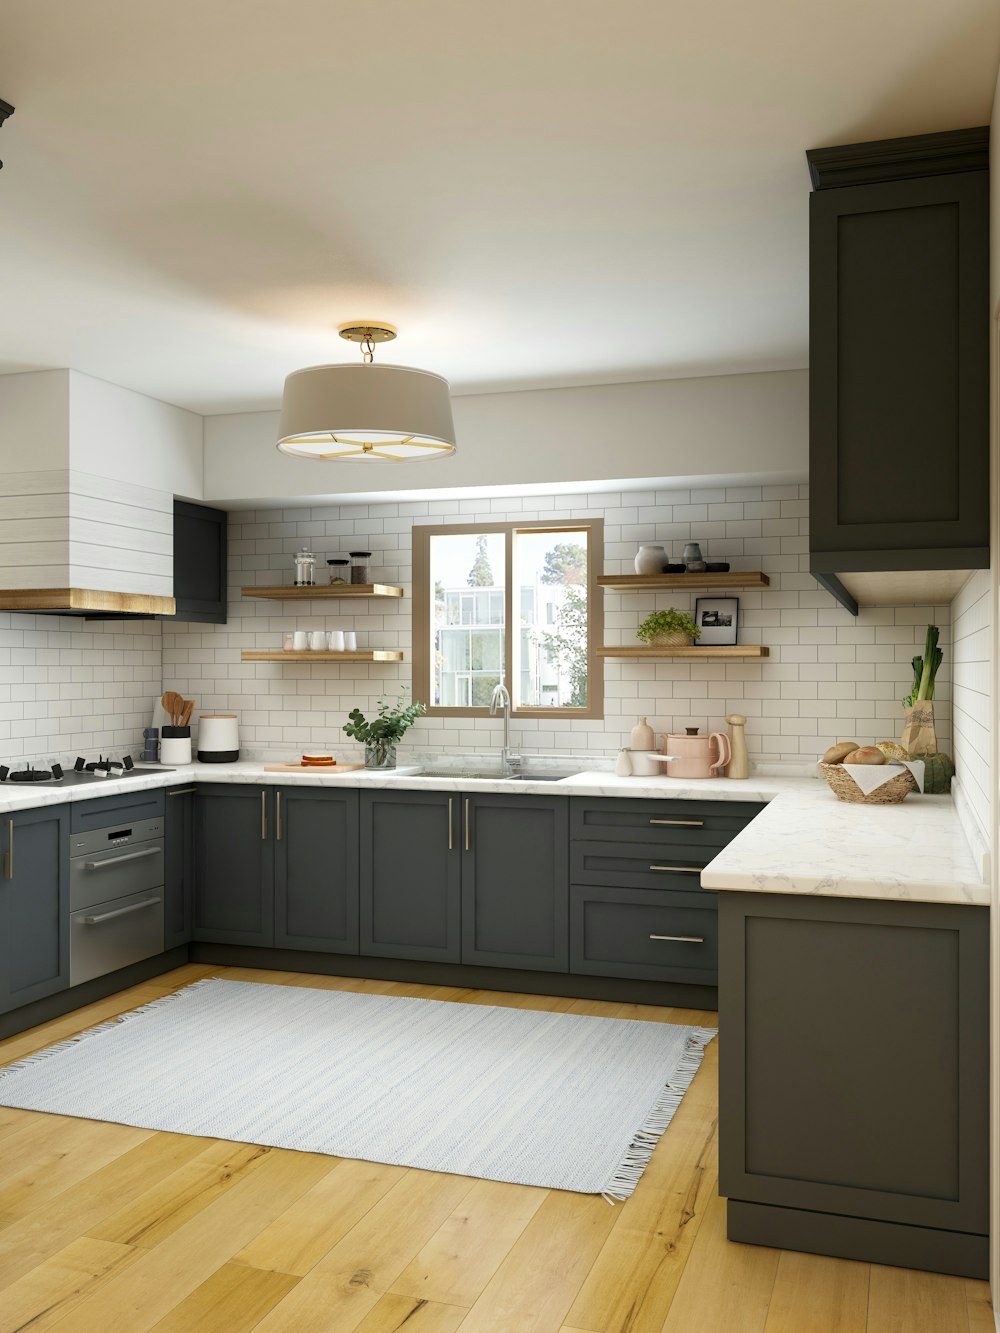 500 Kitchen Design Pictures Download Free Images On Unsplash